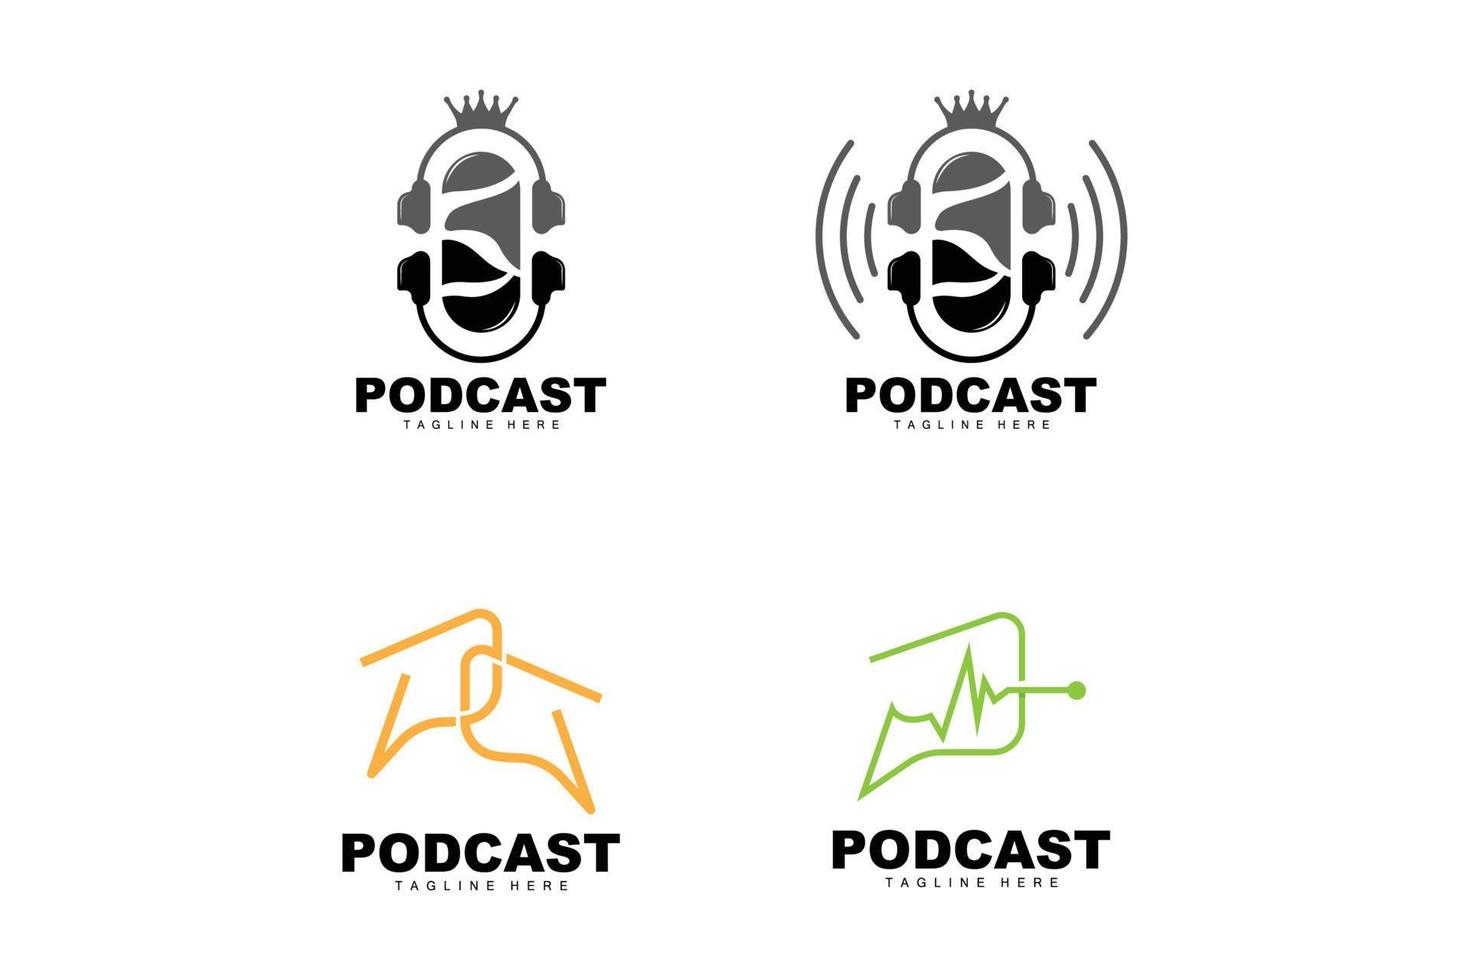 logotipo do podcast, vetor, fone de ouvido e bate-papo, design simples de microfone vintage vetor